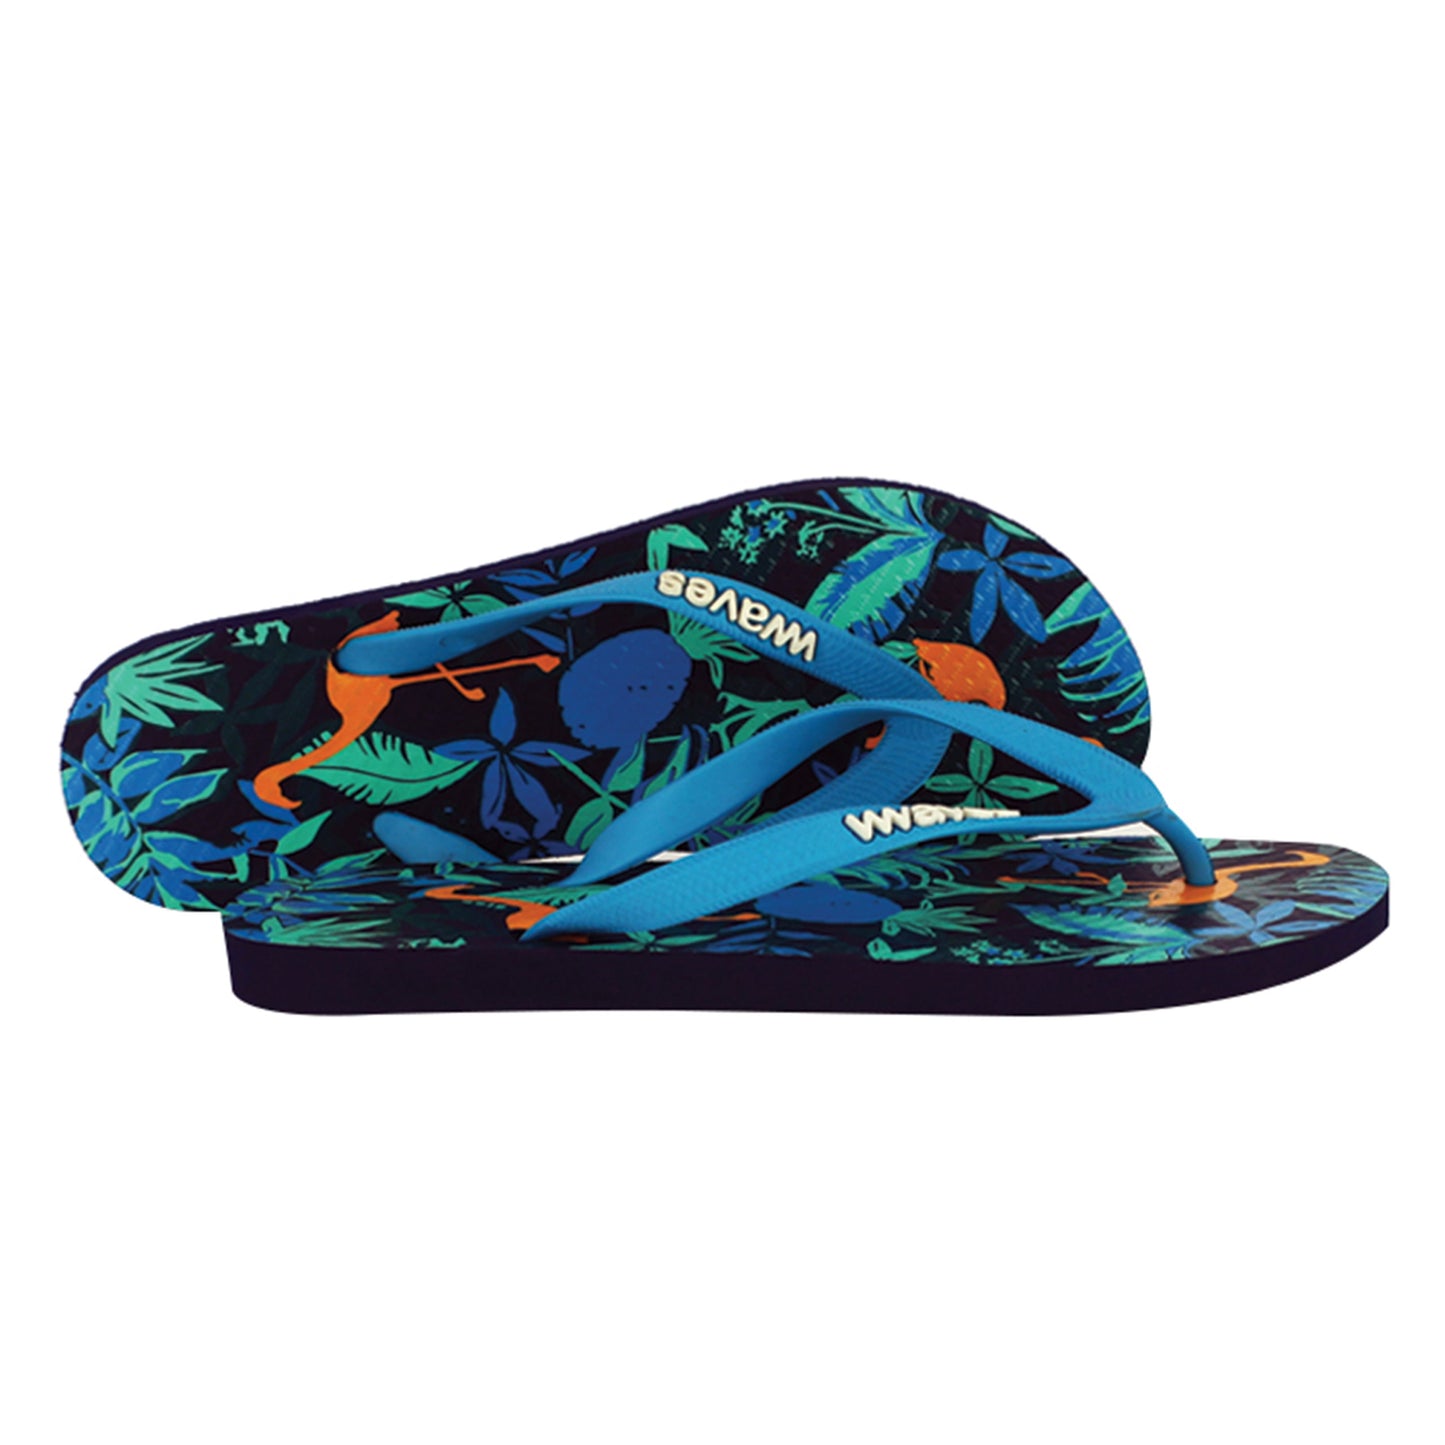 Waves Natural Rubber Flip Flop – Tropical Print Black & Turquoise